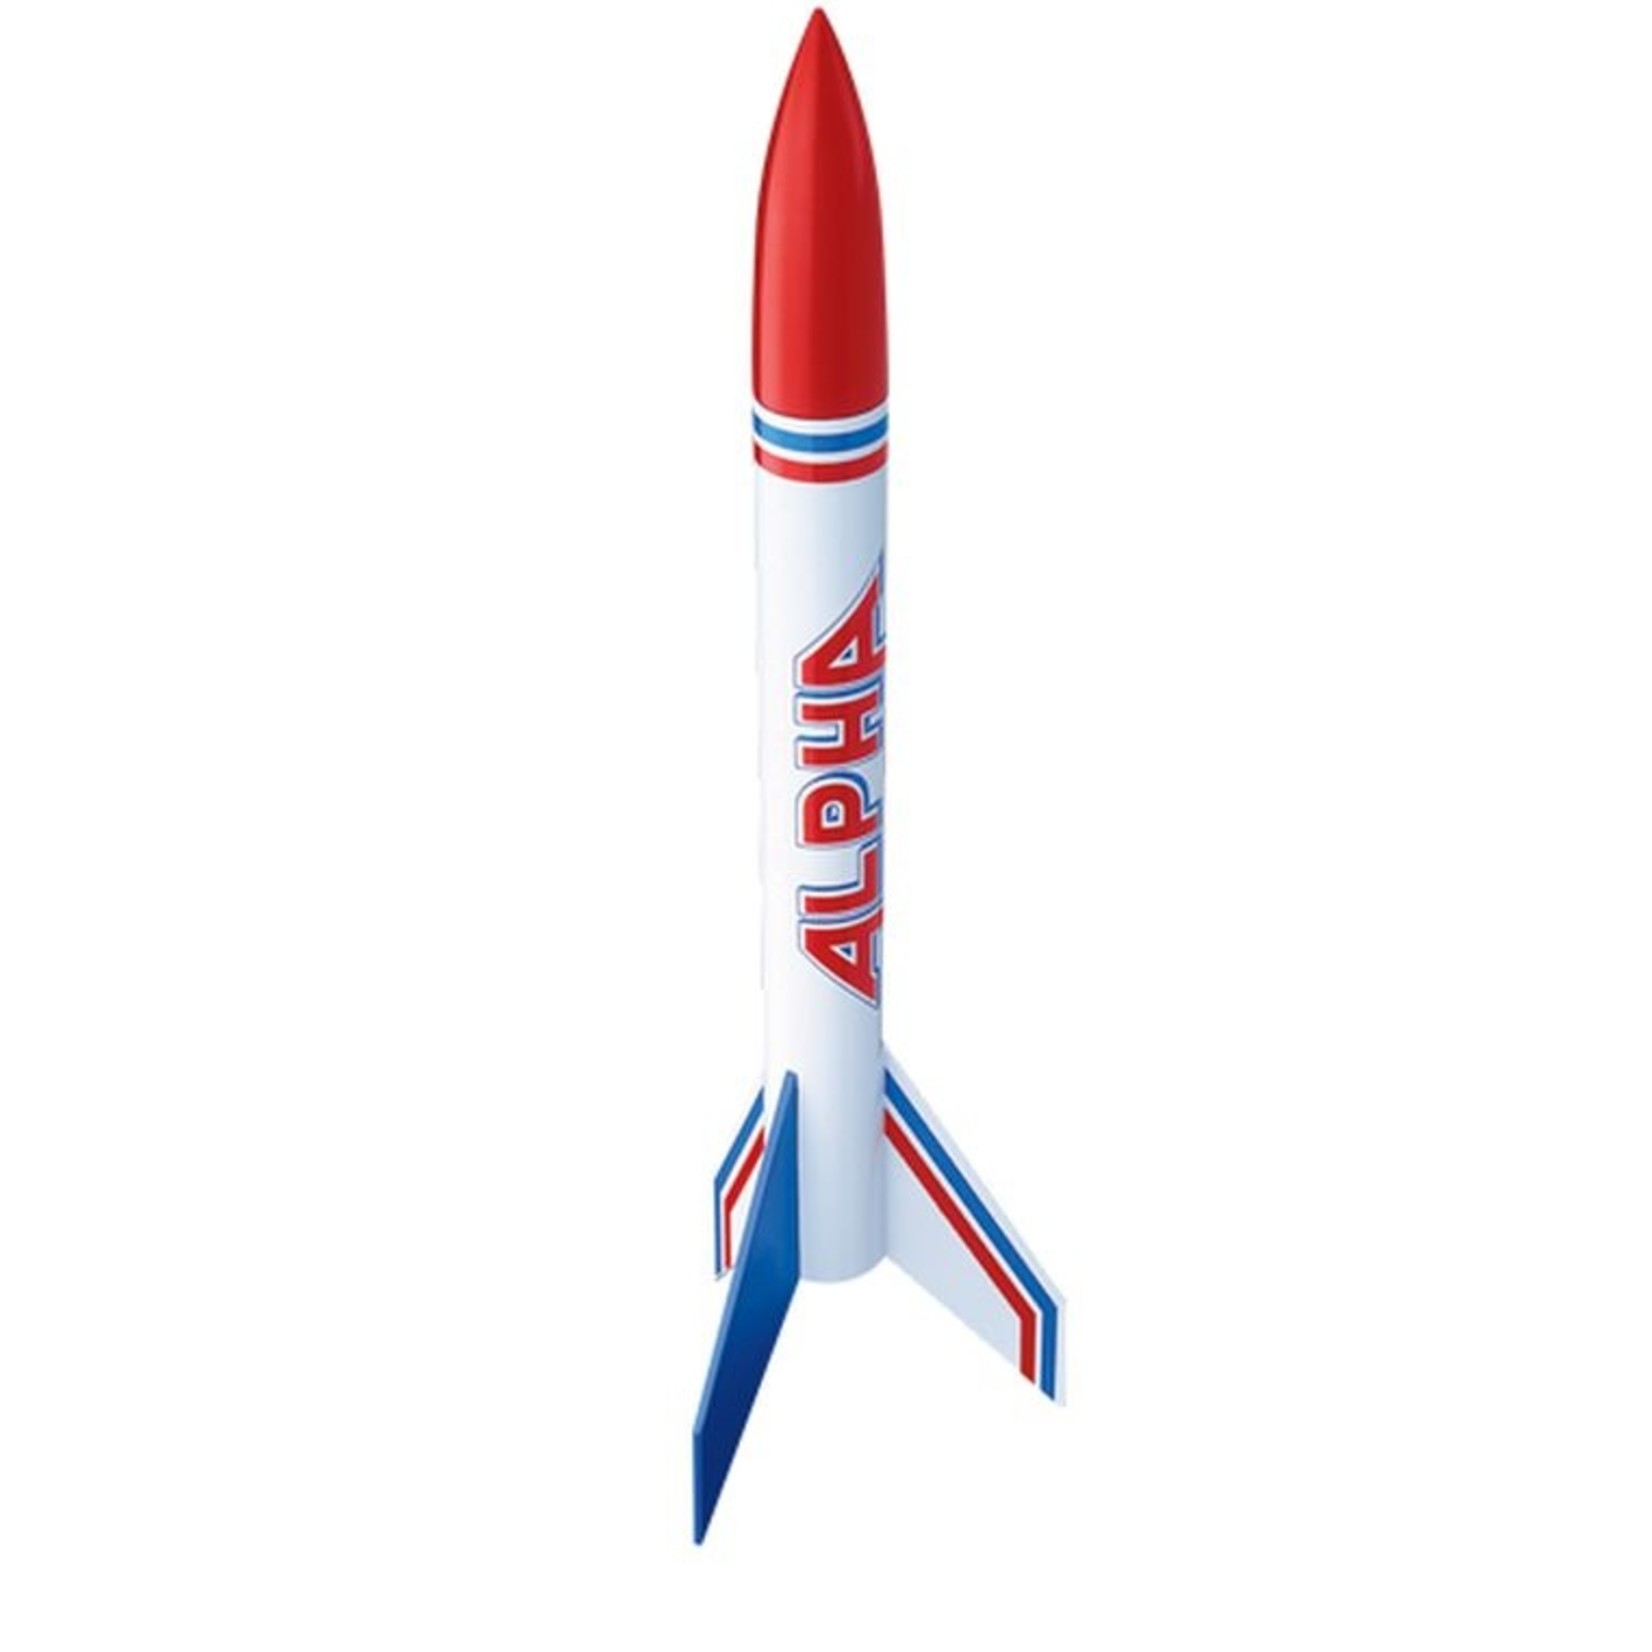 Estes Rockets EST1225  Alpha Rocket Kit, Skill Level 1